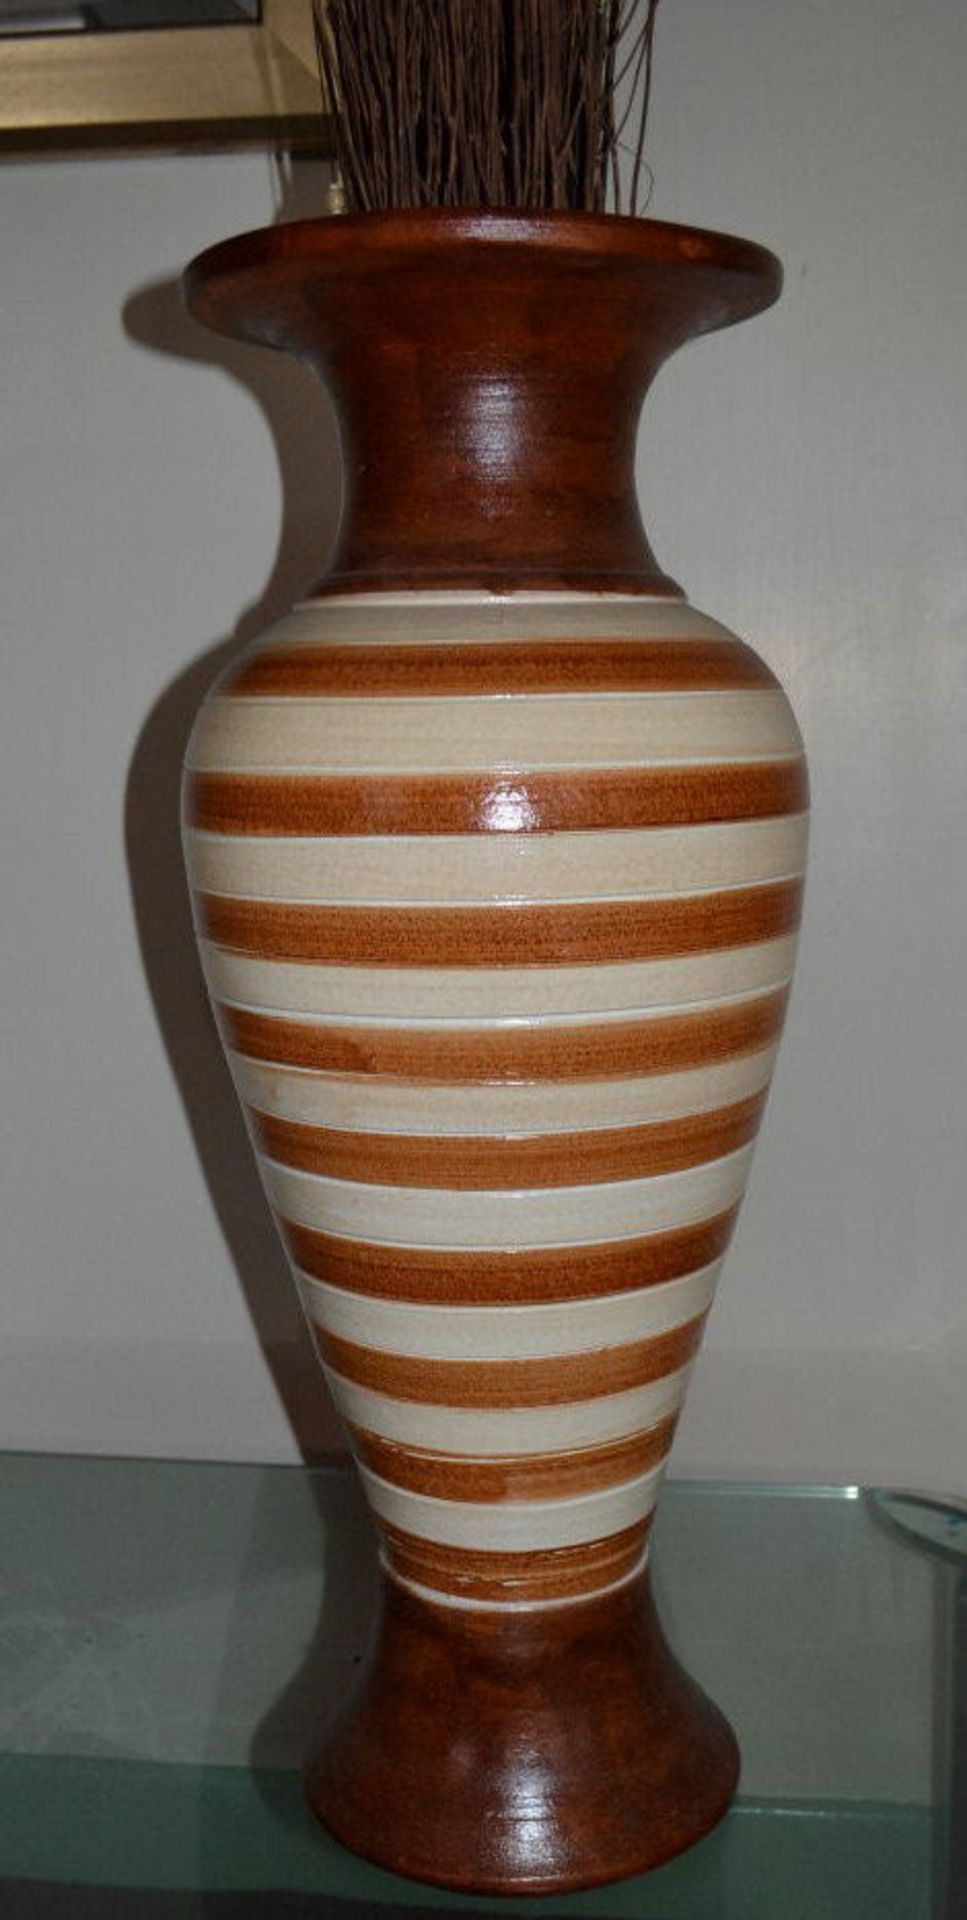 5 Assorted Decorative Vases - See Description For Details - Image 13 of 19